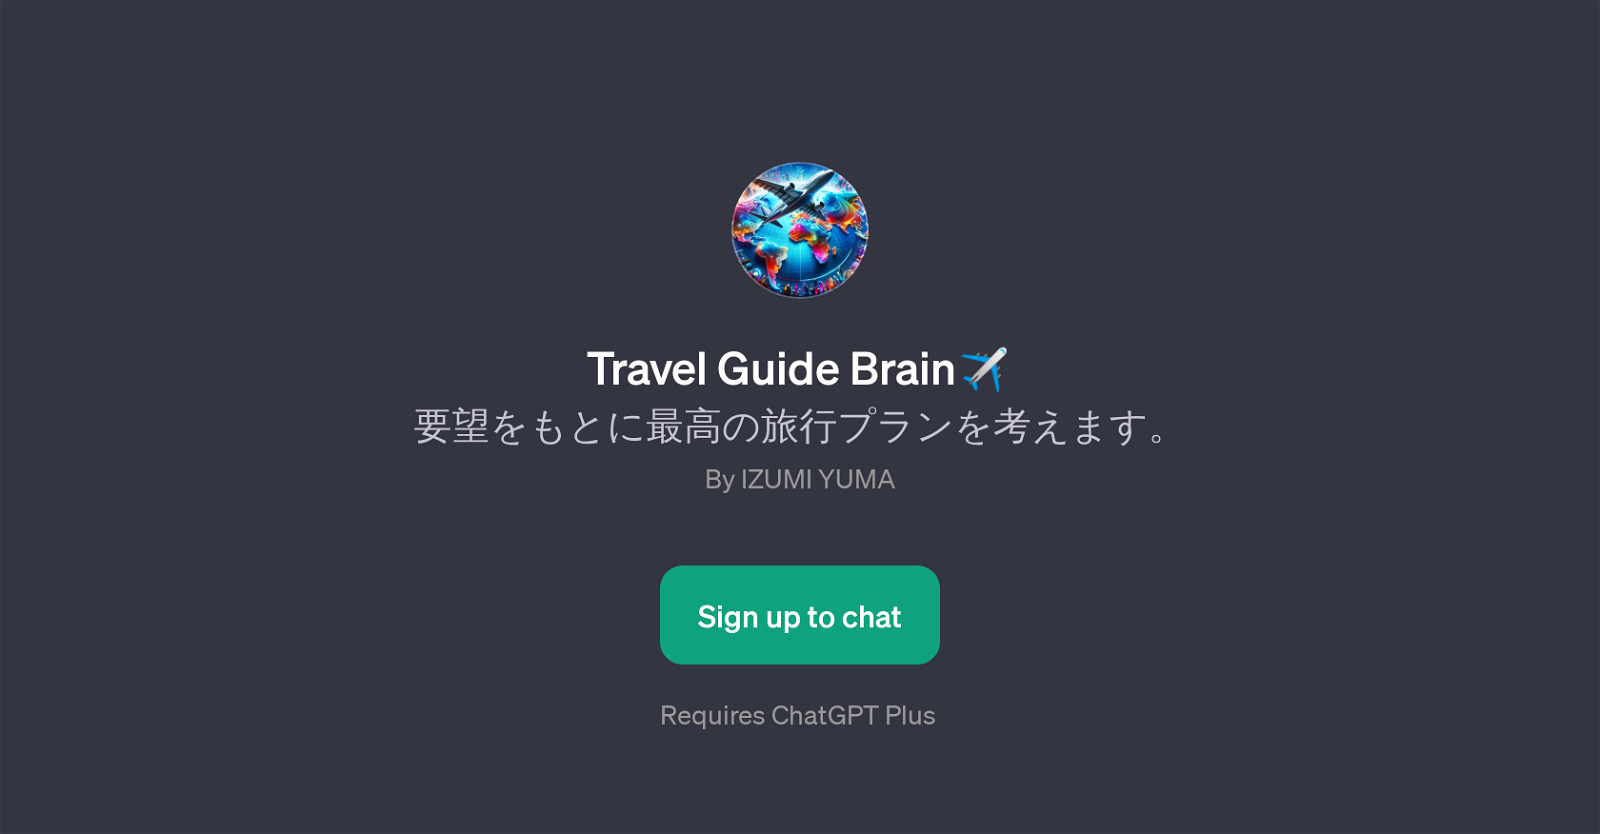 Travel Guide Brain website